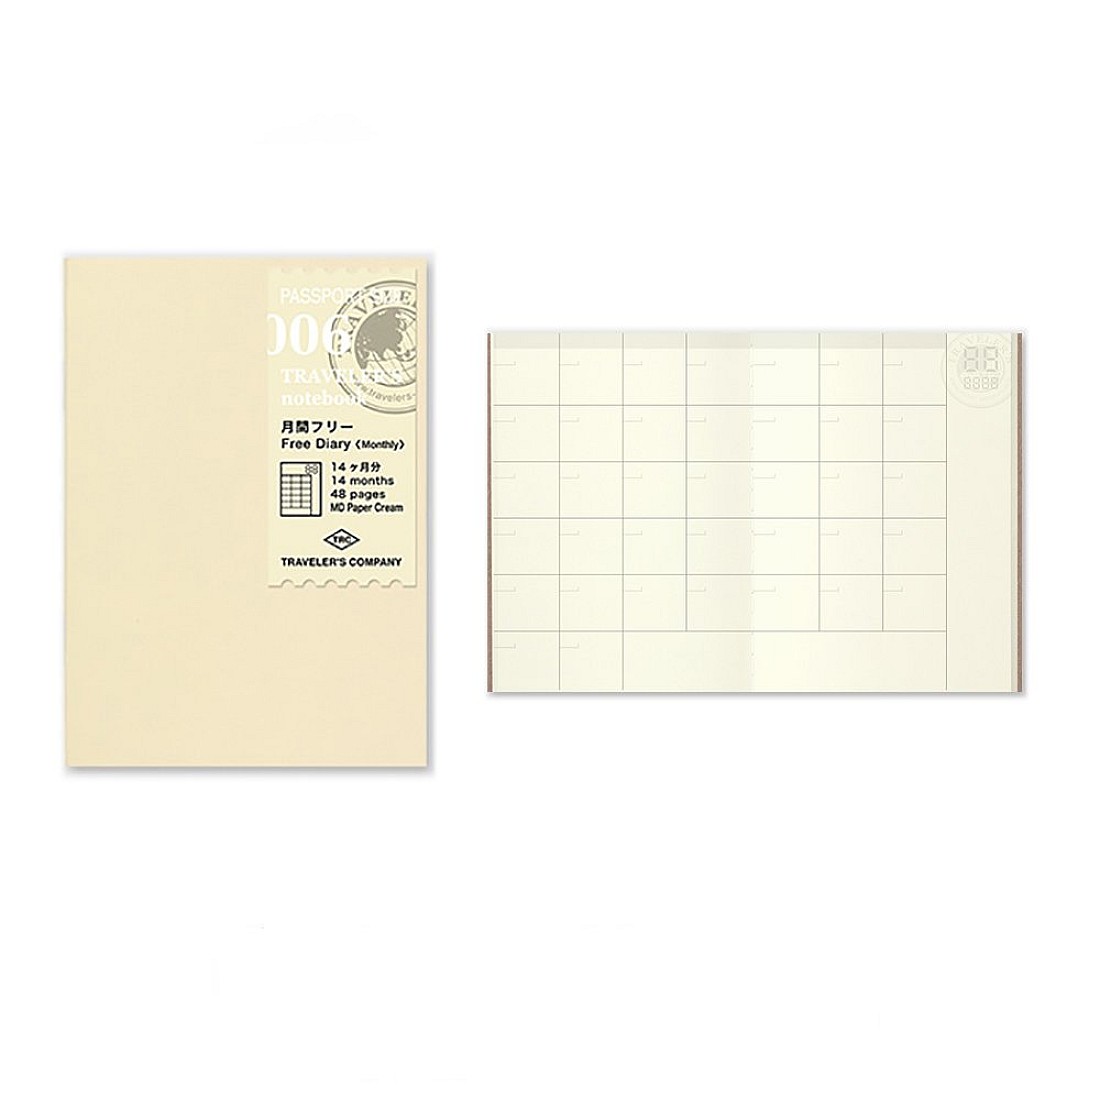 Traveler's Company Refill Passport 006 Free Diary Month Notebook